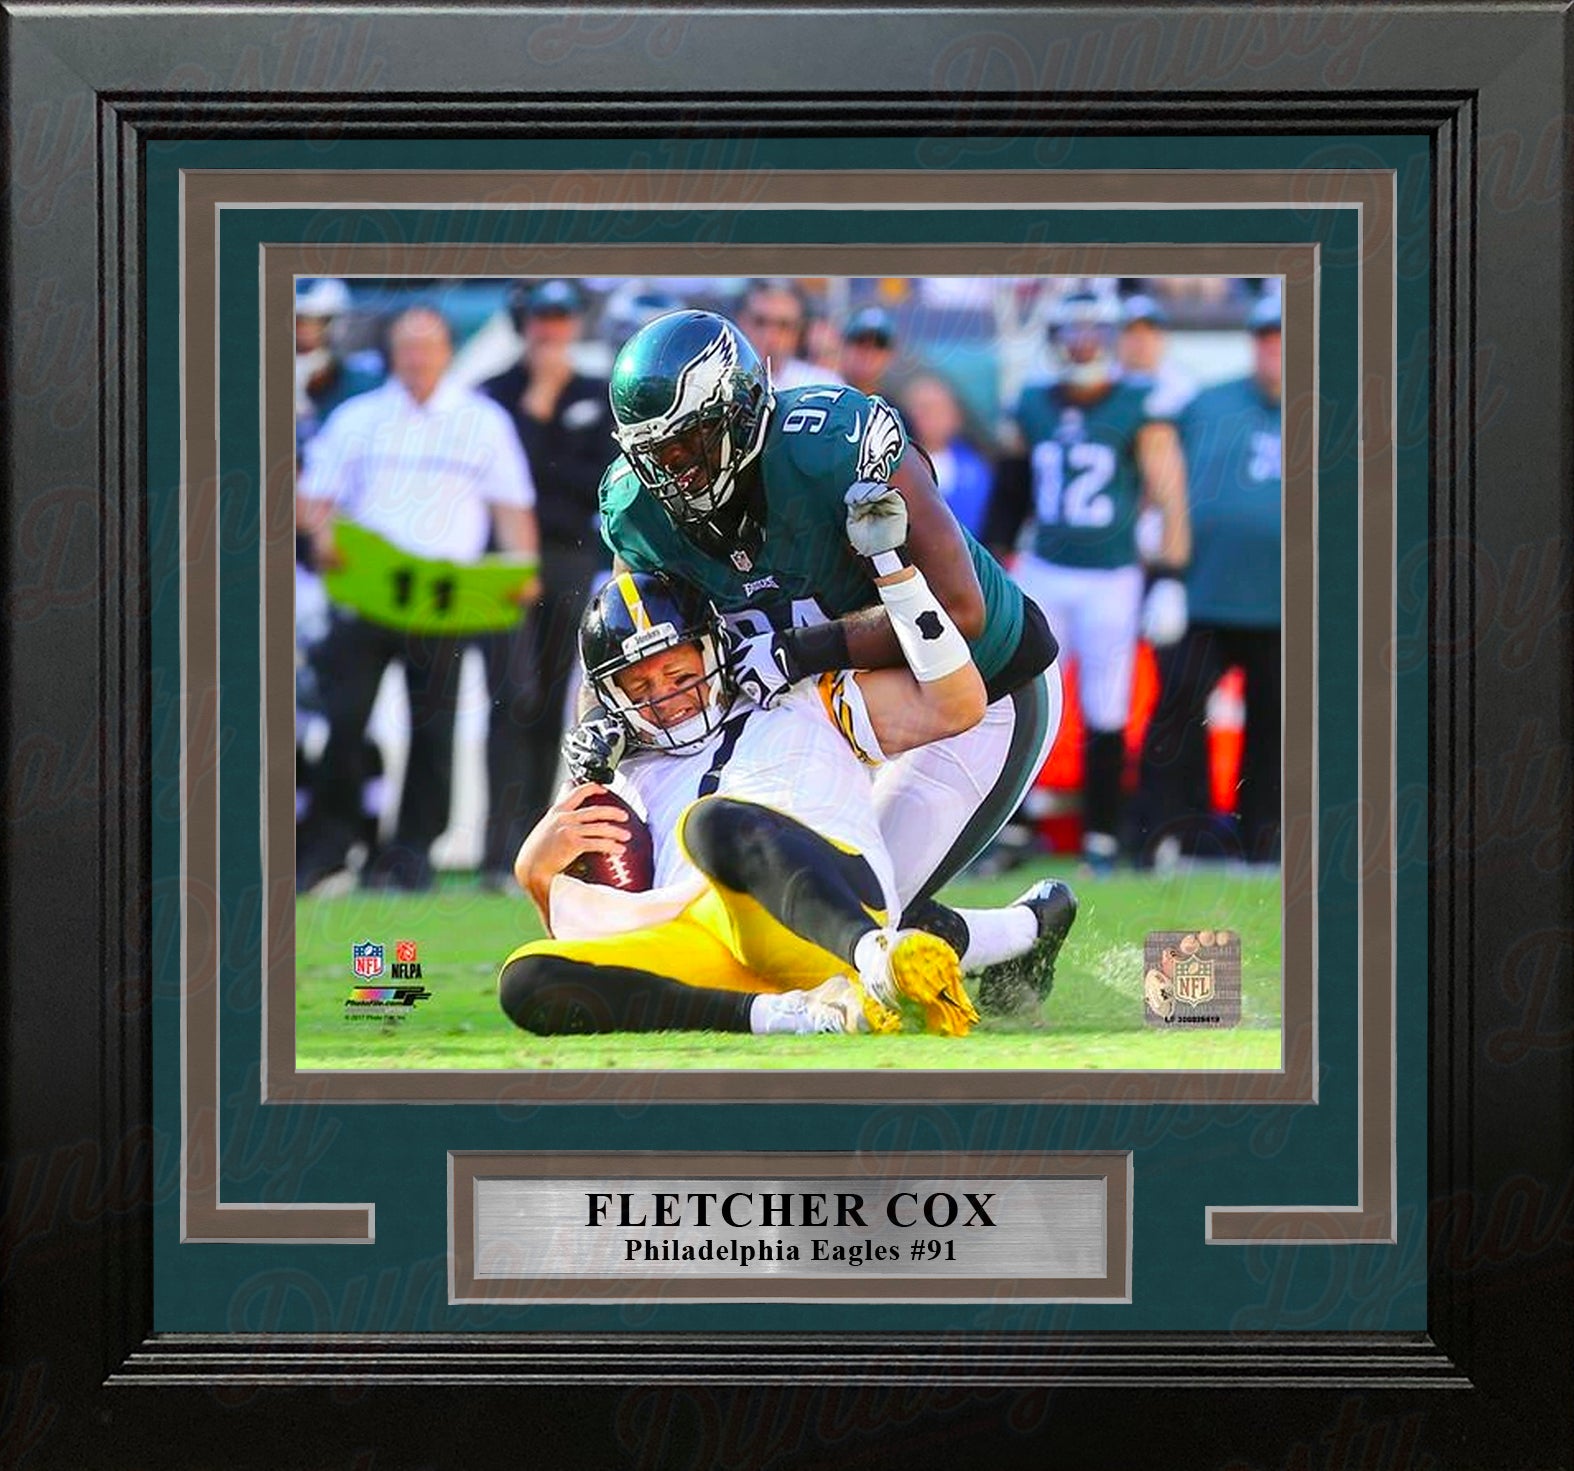 Fletcher Cox Sacks Roethlisberger Philadelphia Eagles NFL Football Framed and Matted Photo - Dynasty Sports & Framing 